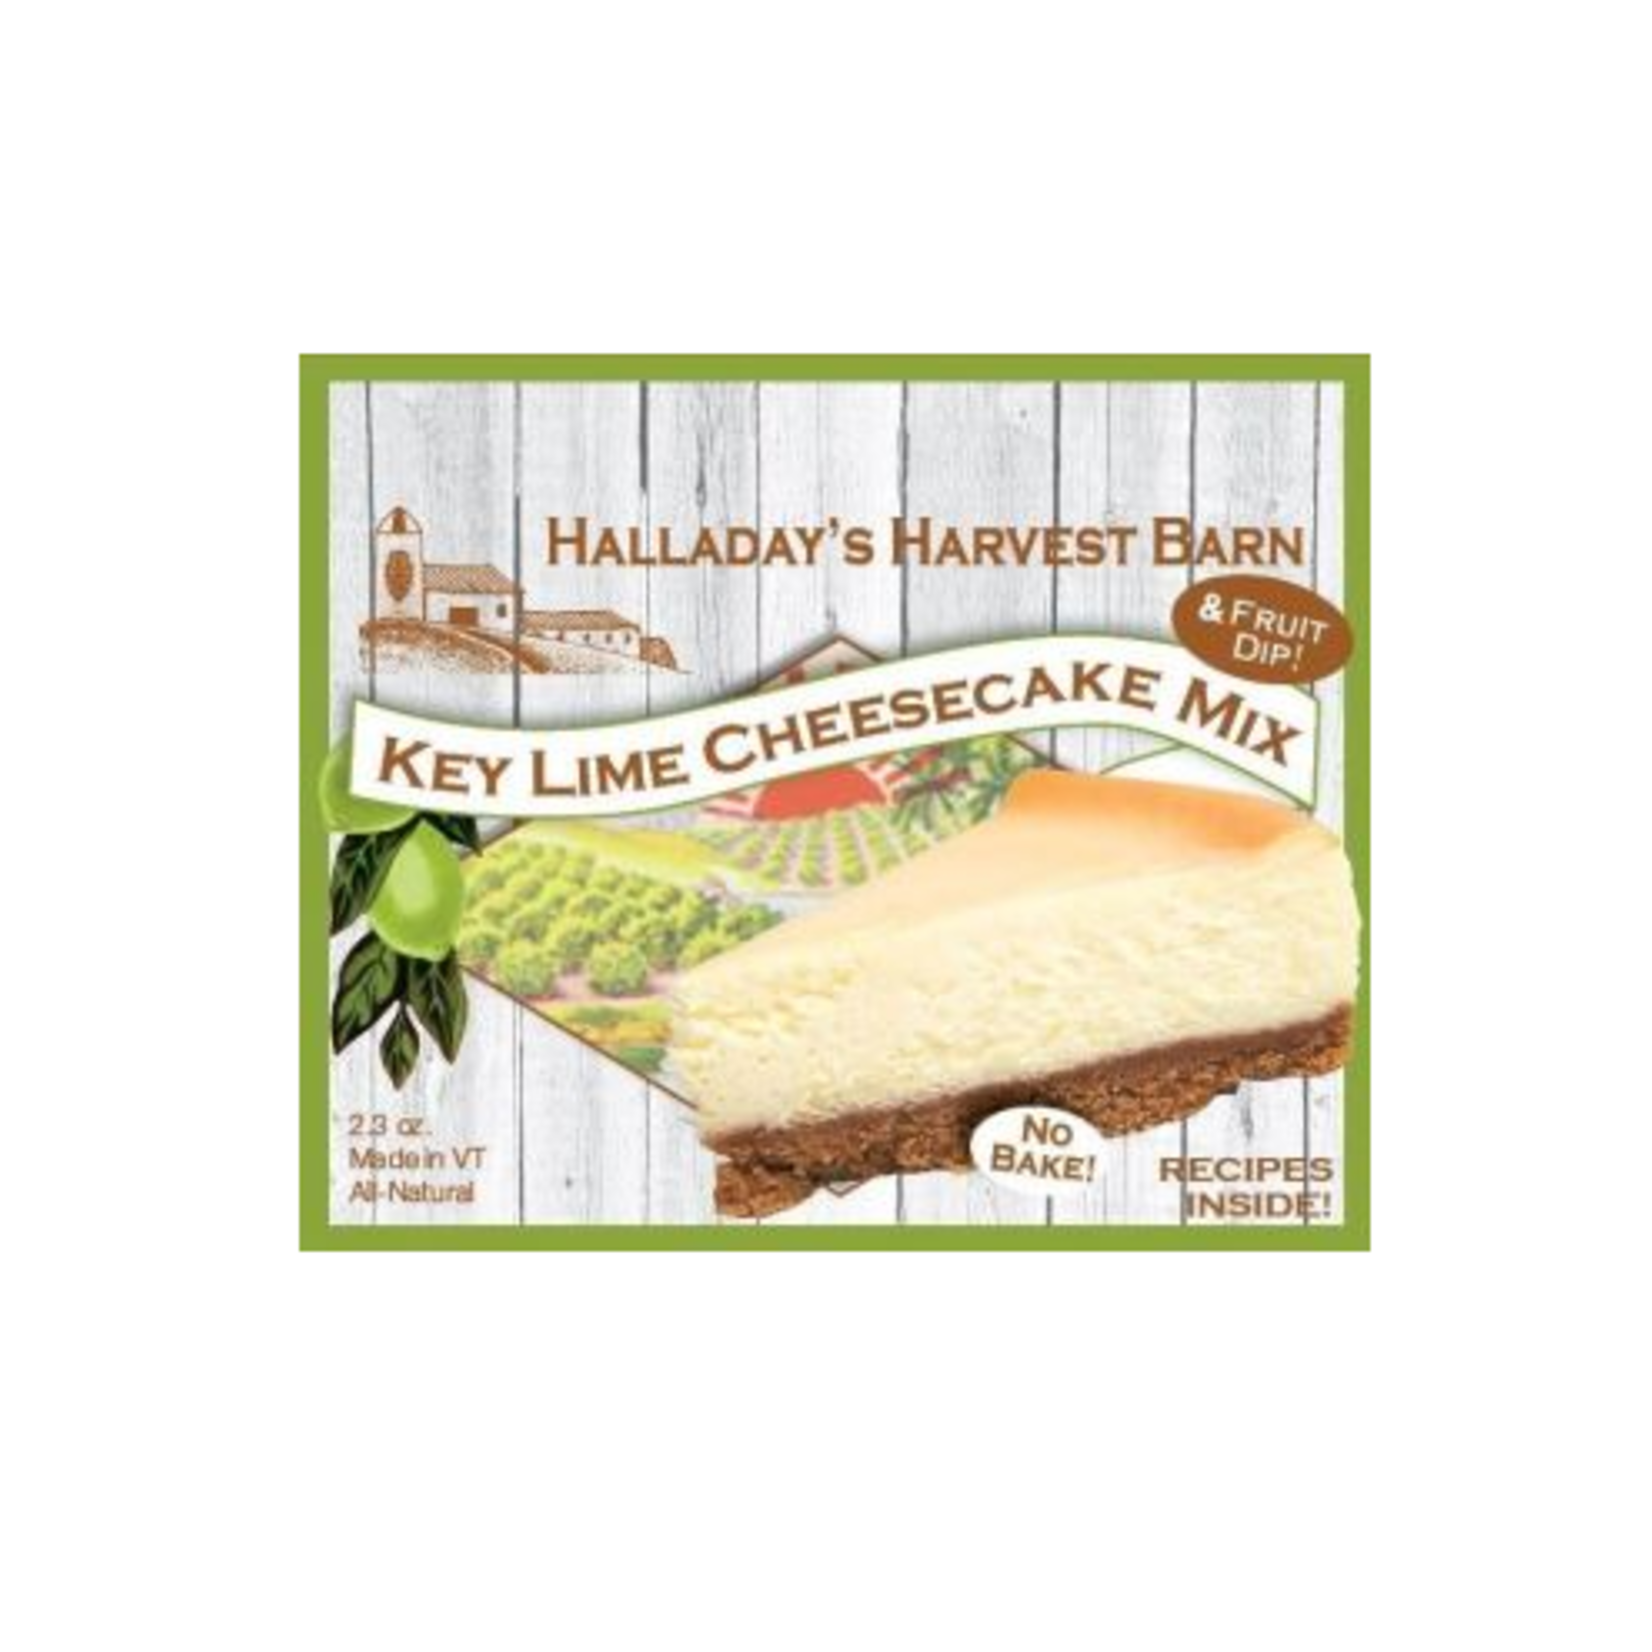 Halladay's Harvest Barn Key Lime Cheesecake Mix